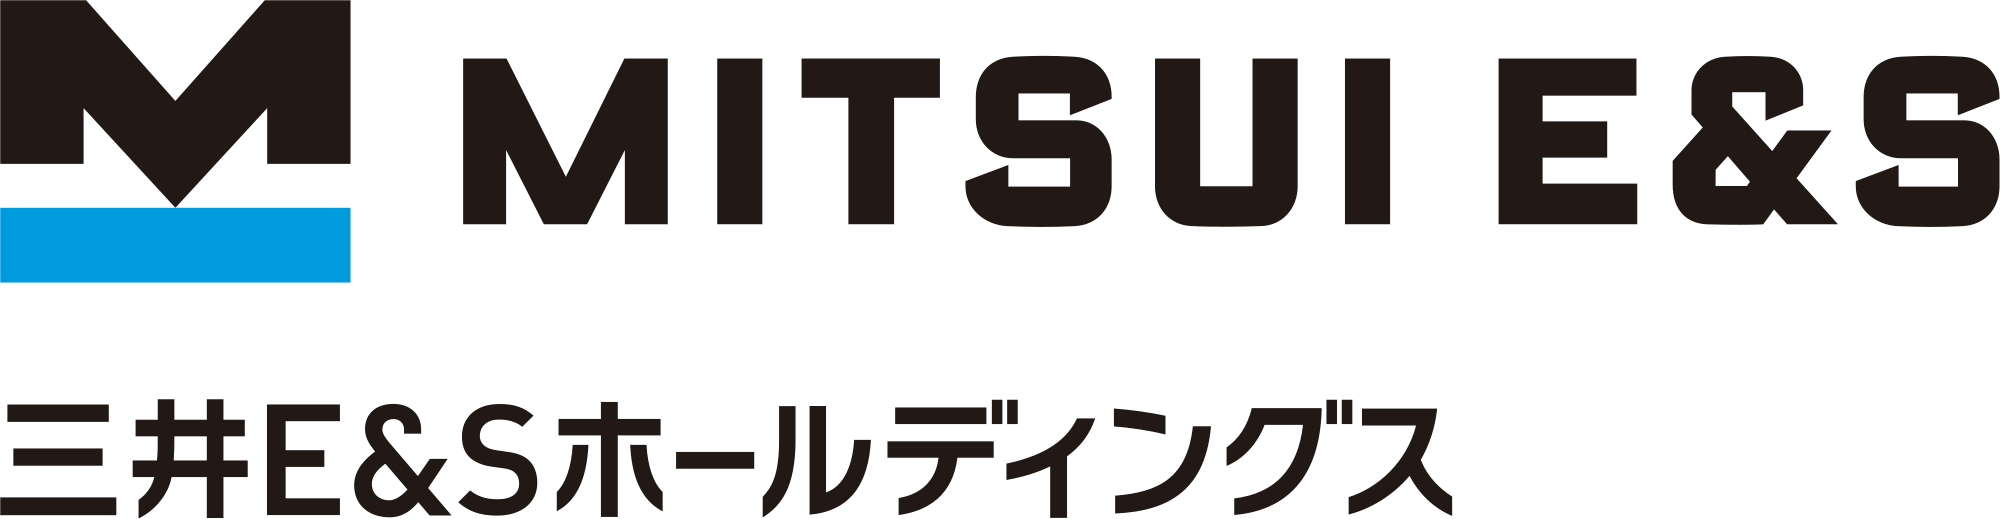 Mitsui Logo - Mitsui E&S Holdings logo.svg